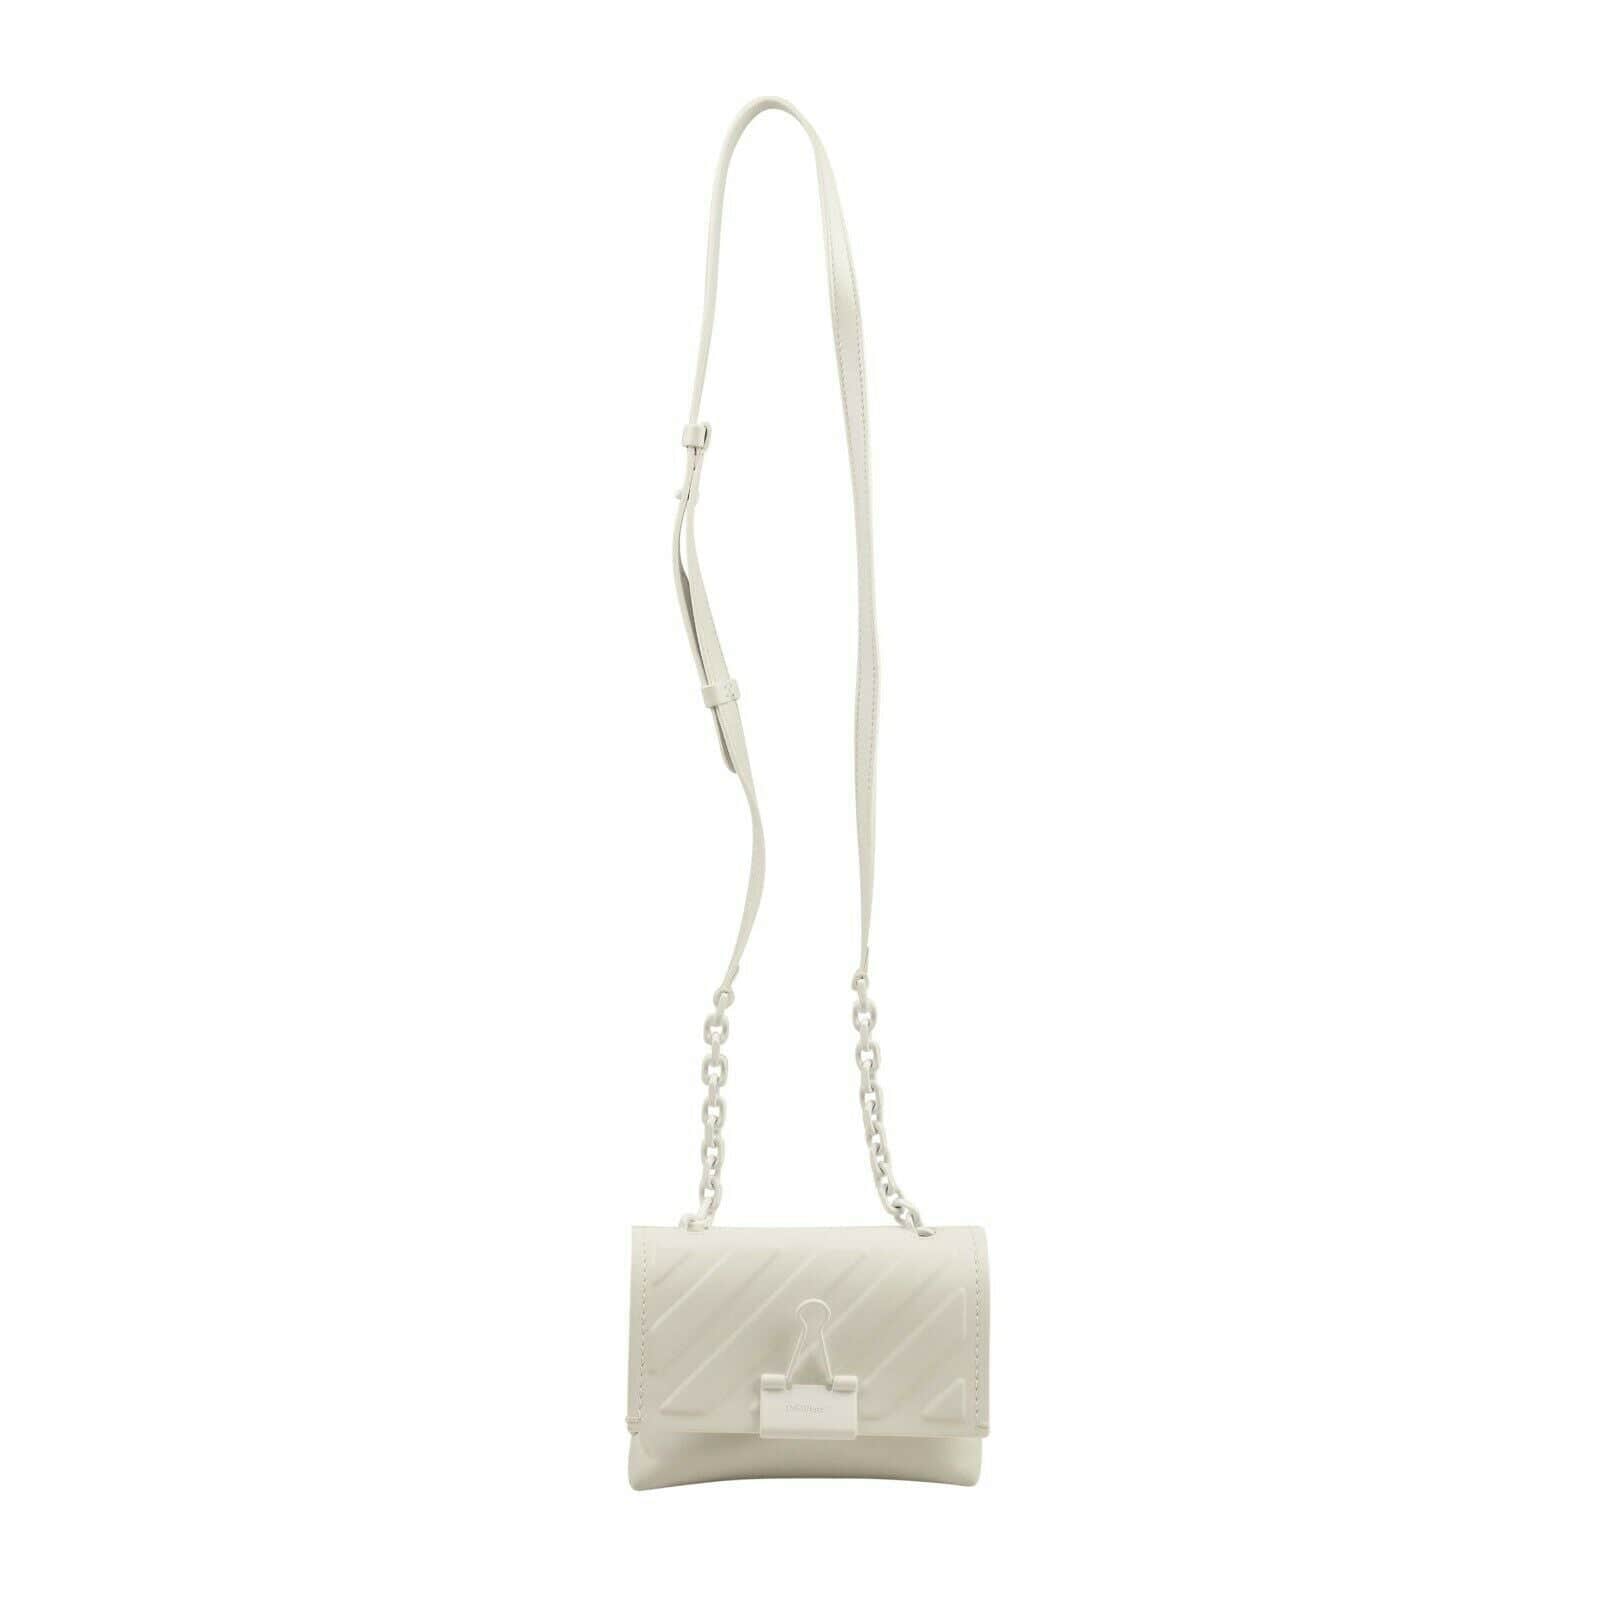 Women's Off-White Handbags